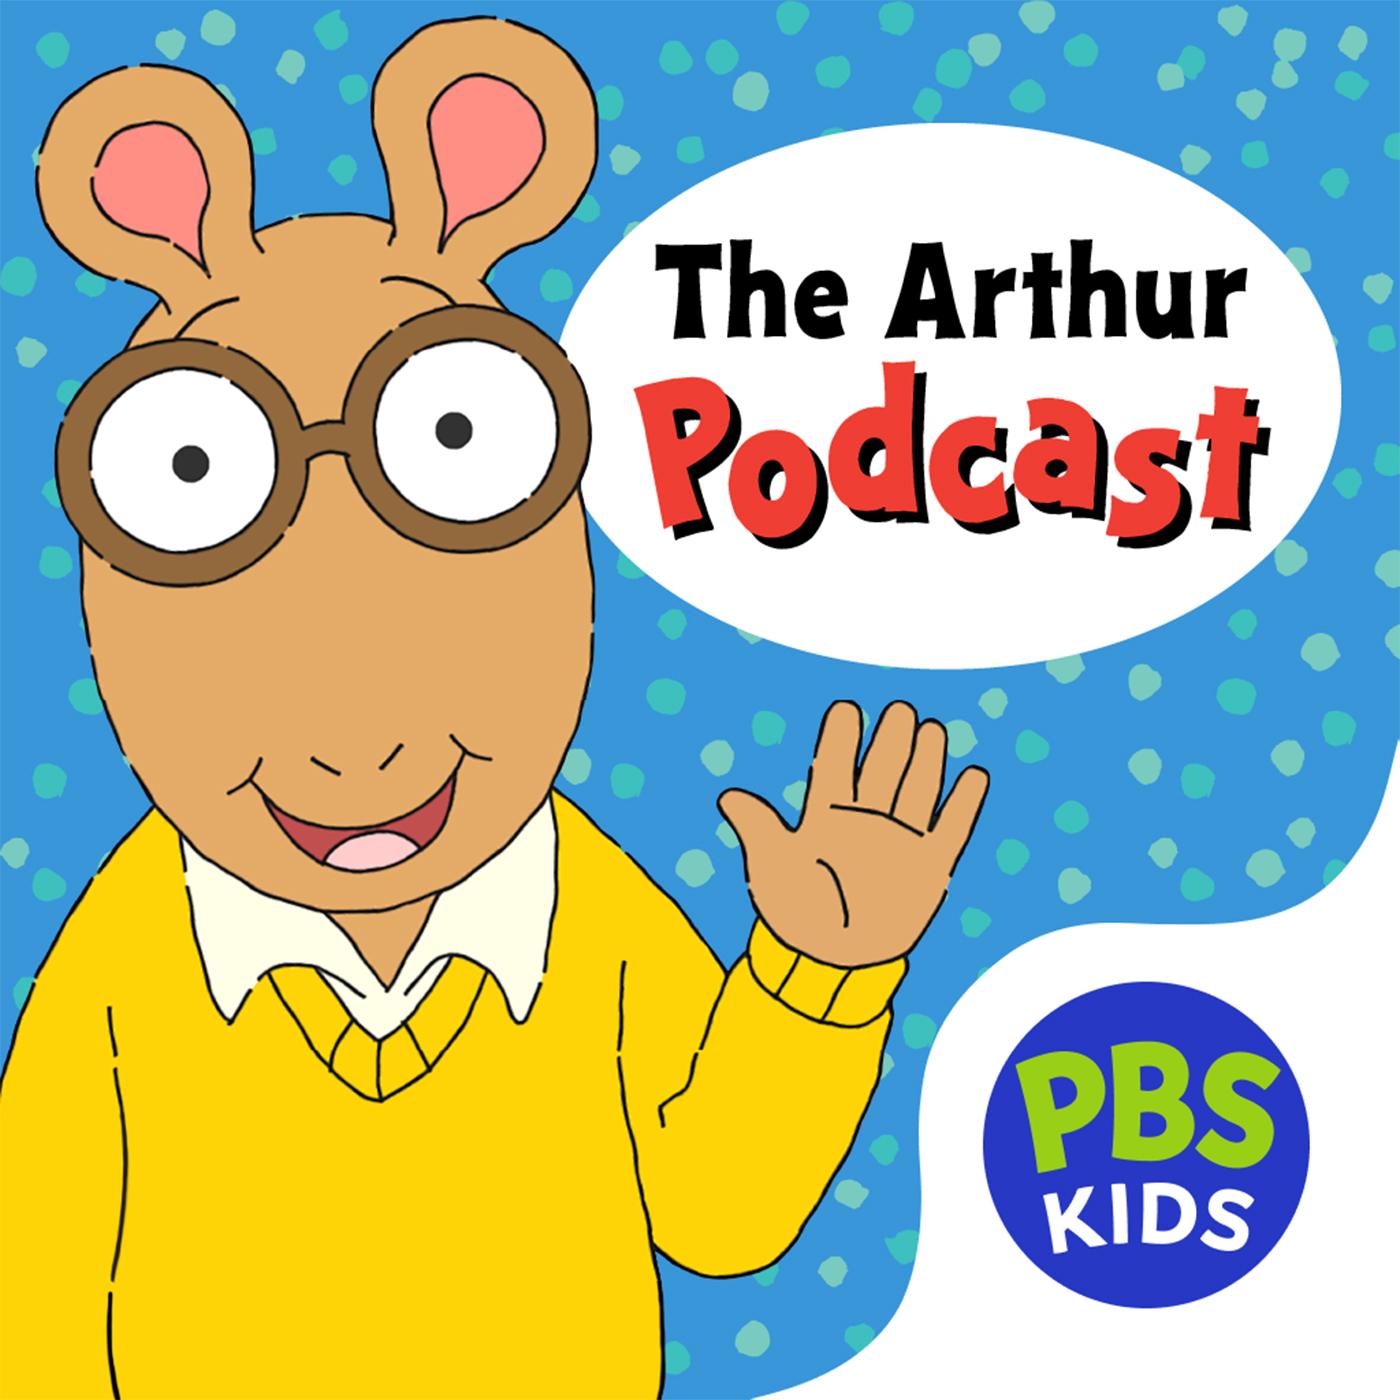 Thumbnail for "Introducing The Arthur Podcast Season 3!".